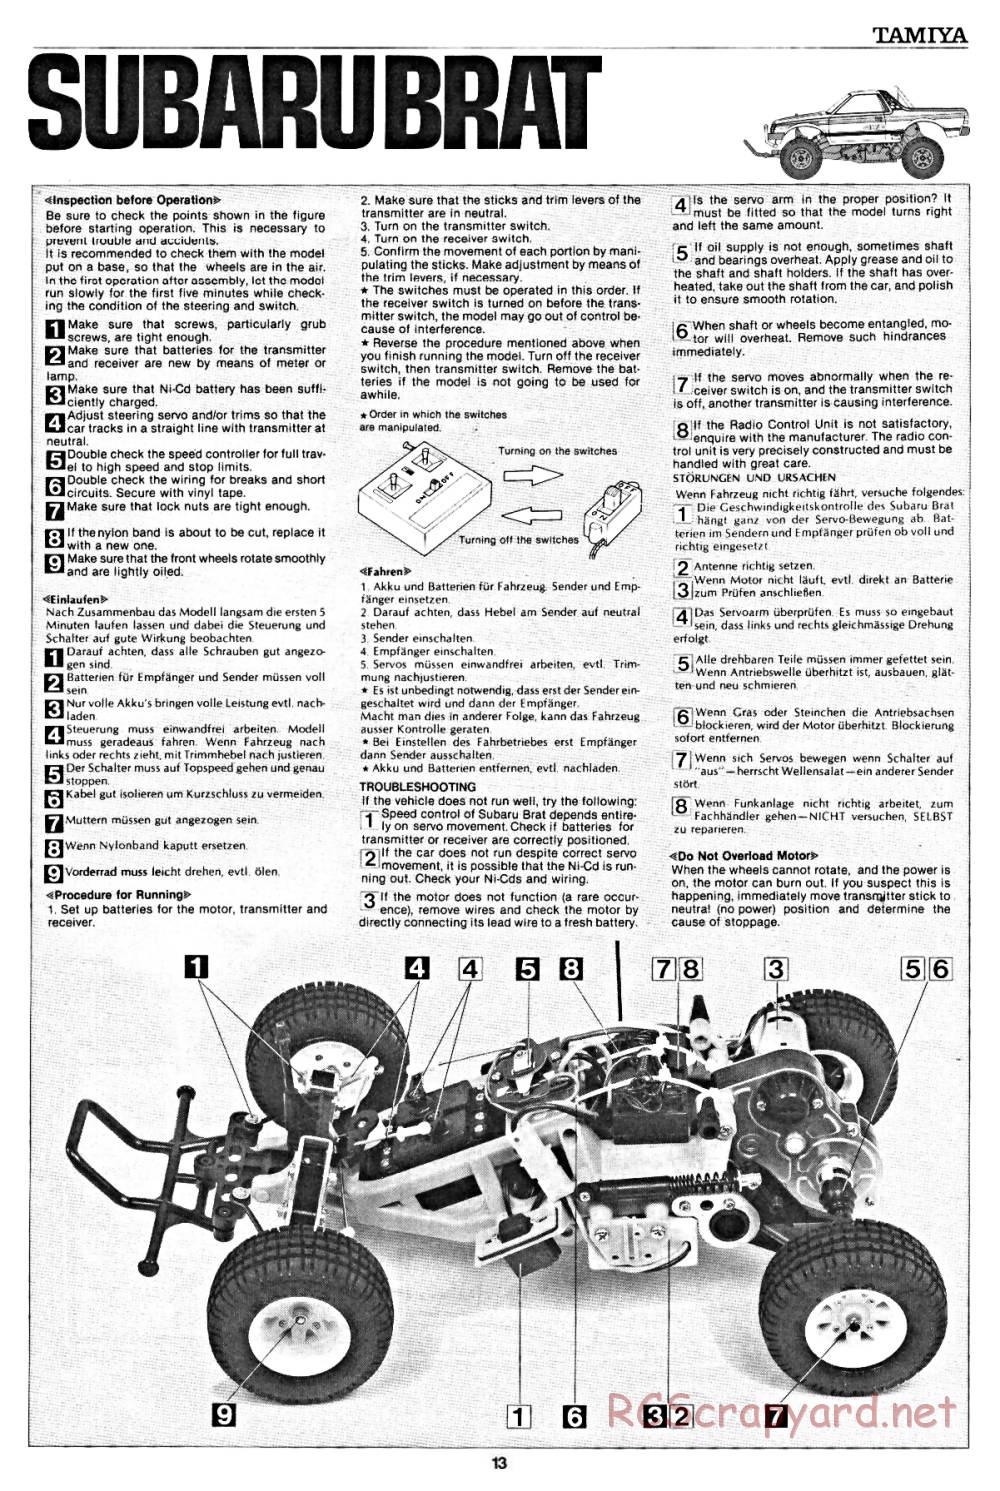 Tamiya - Subaru Brat - 58038 - Manual - Page 13